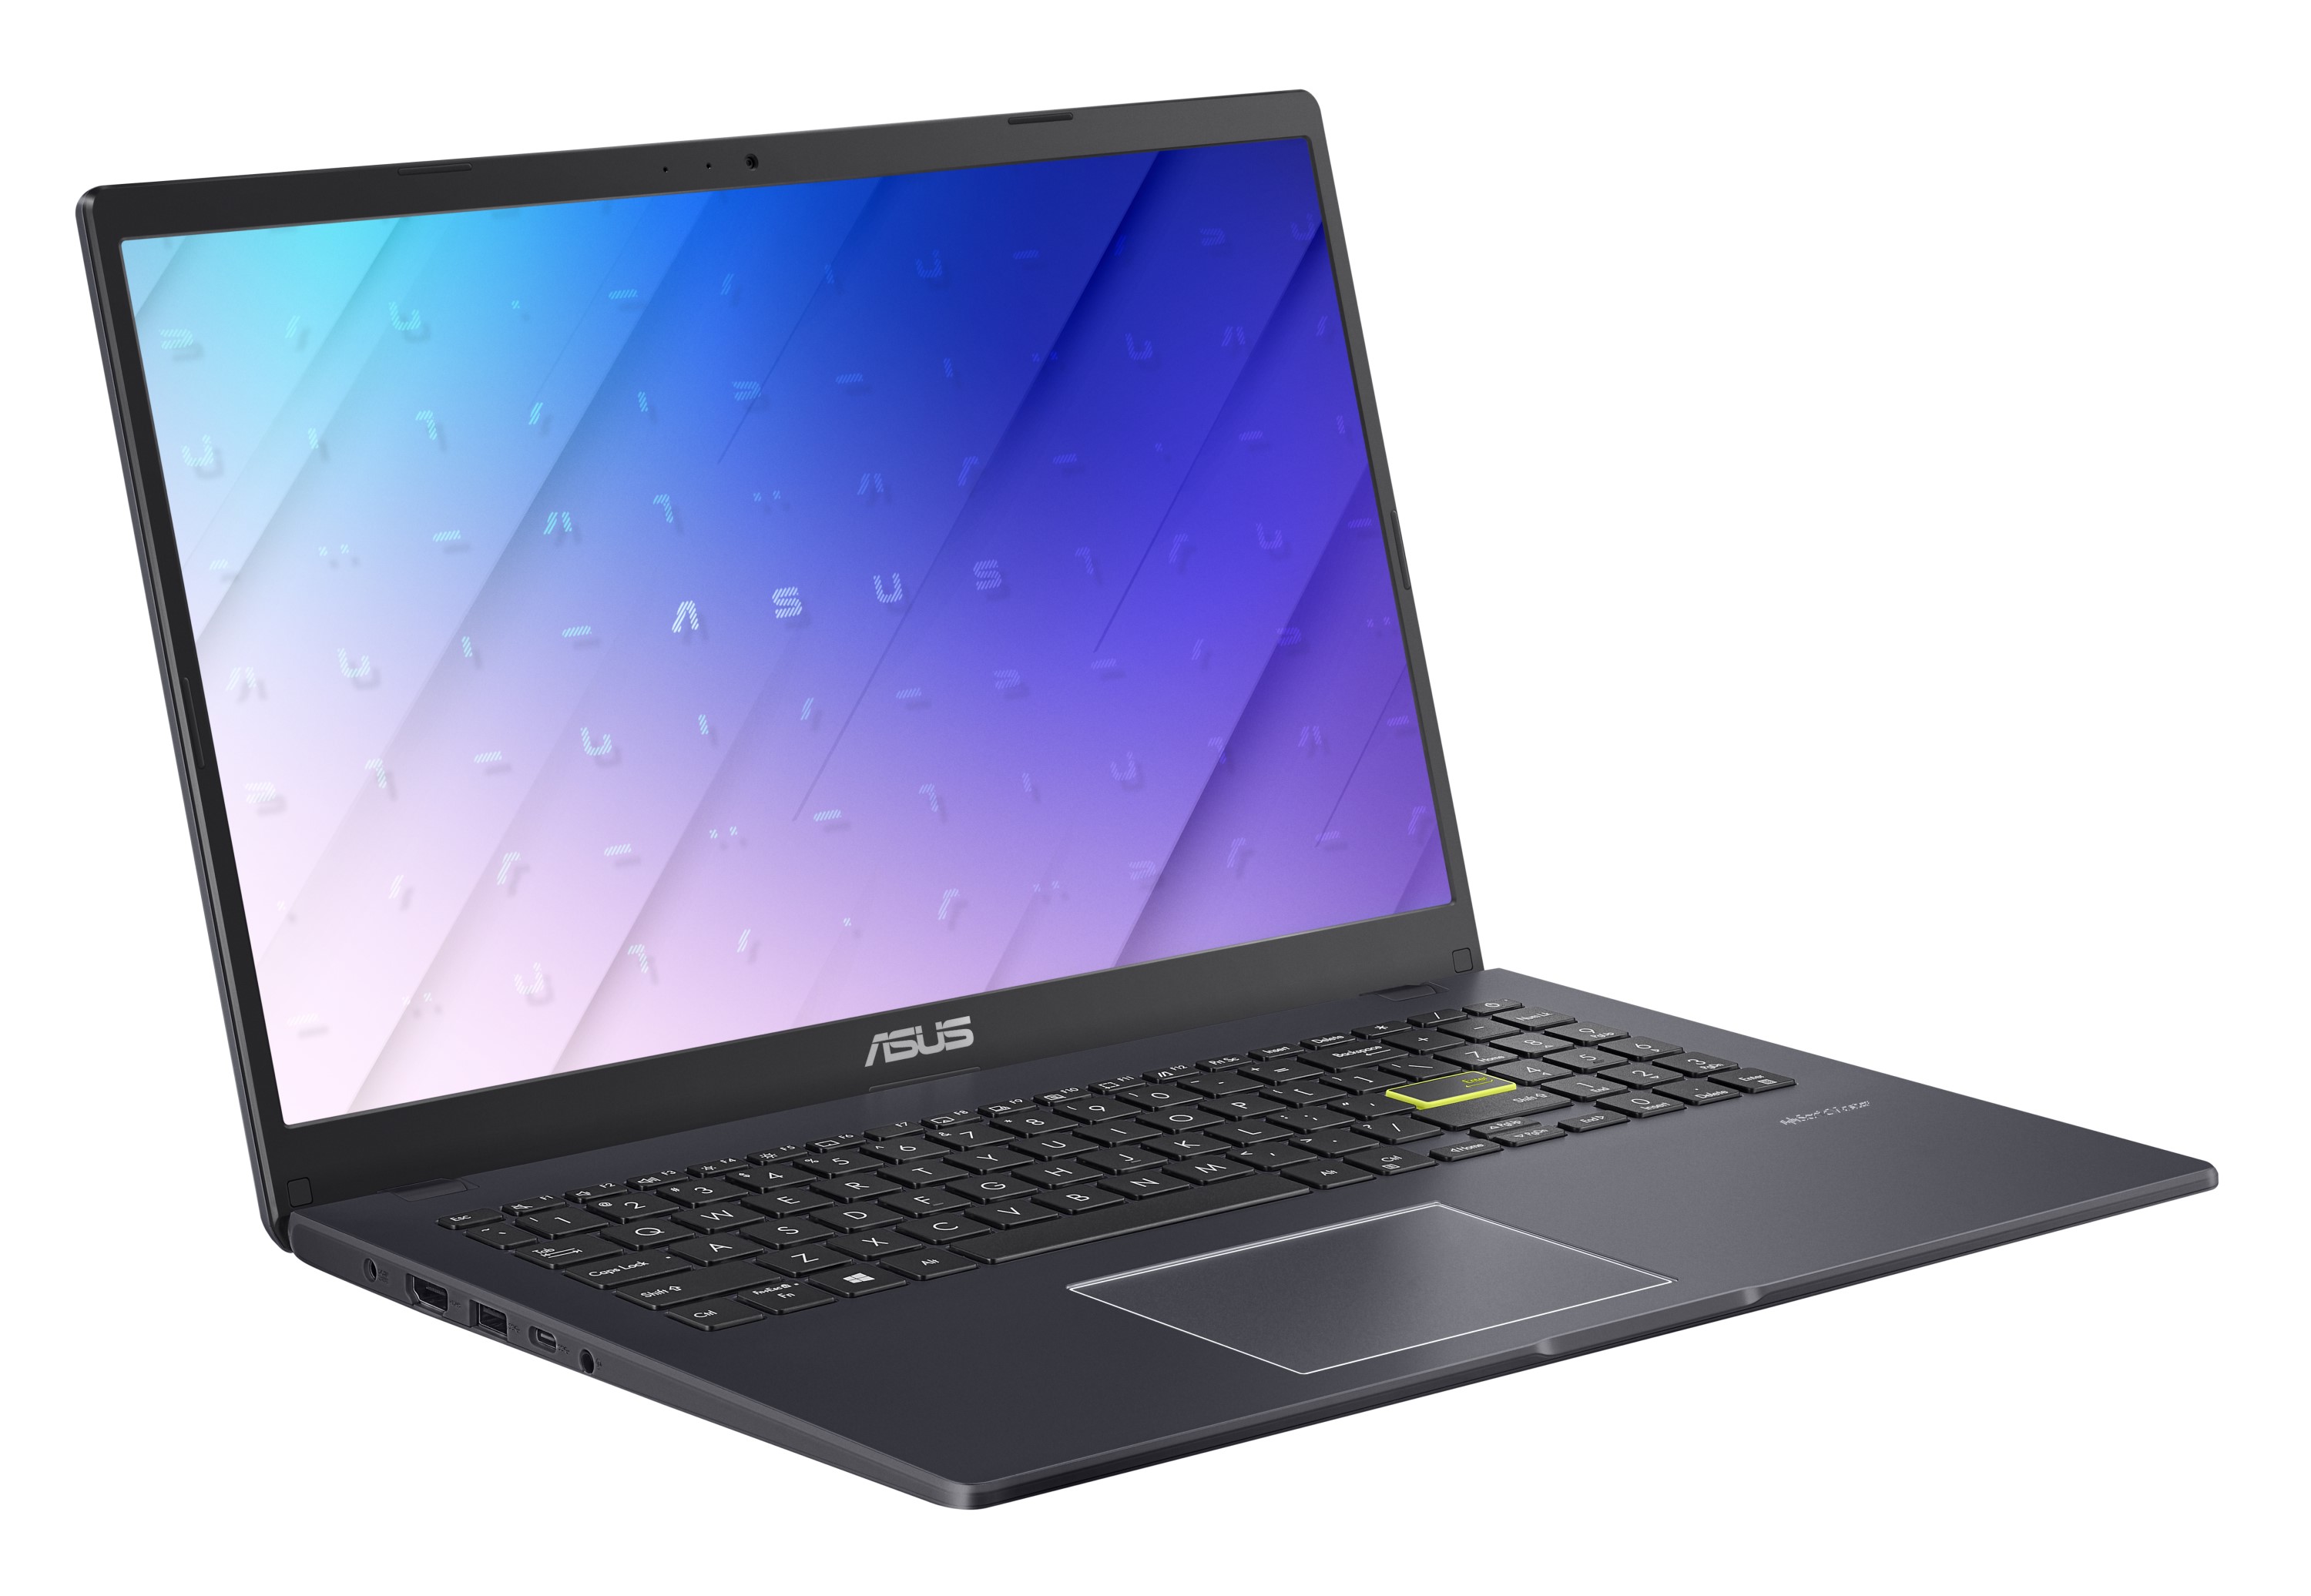 ASUS 15.6" FHD PC Laptop, Intel Celeron N4020, 4GB RAM, 128GB SSD, Windows 10 S Mode, L510MA-WB04 - image 3 of 10